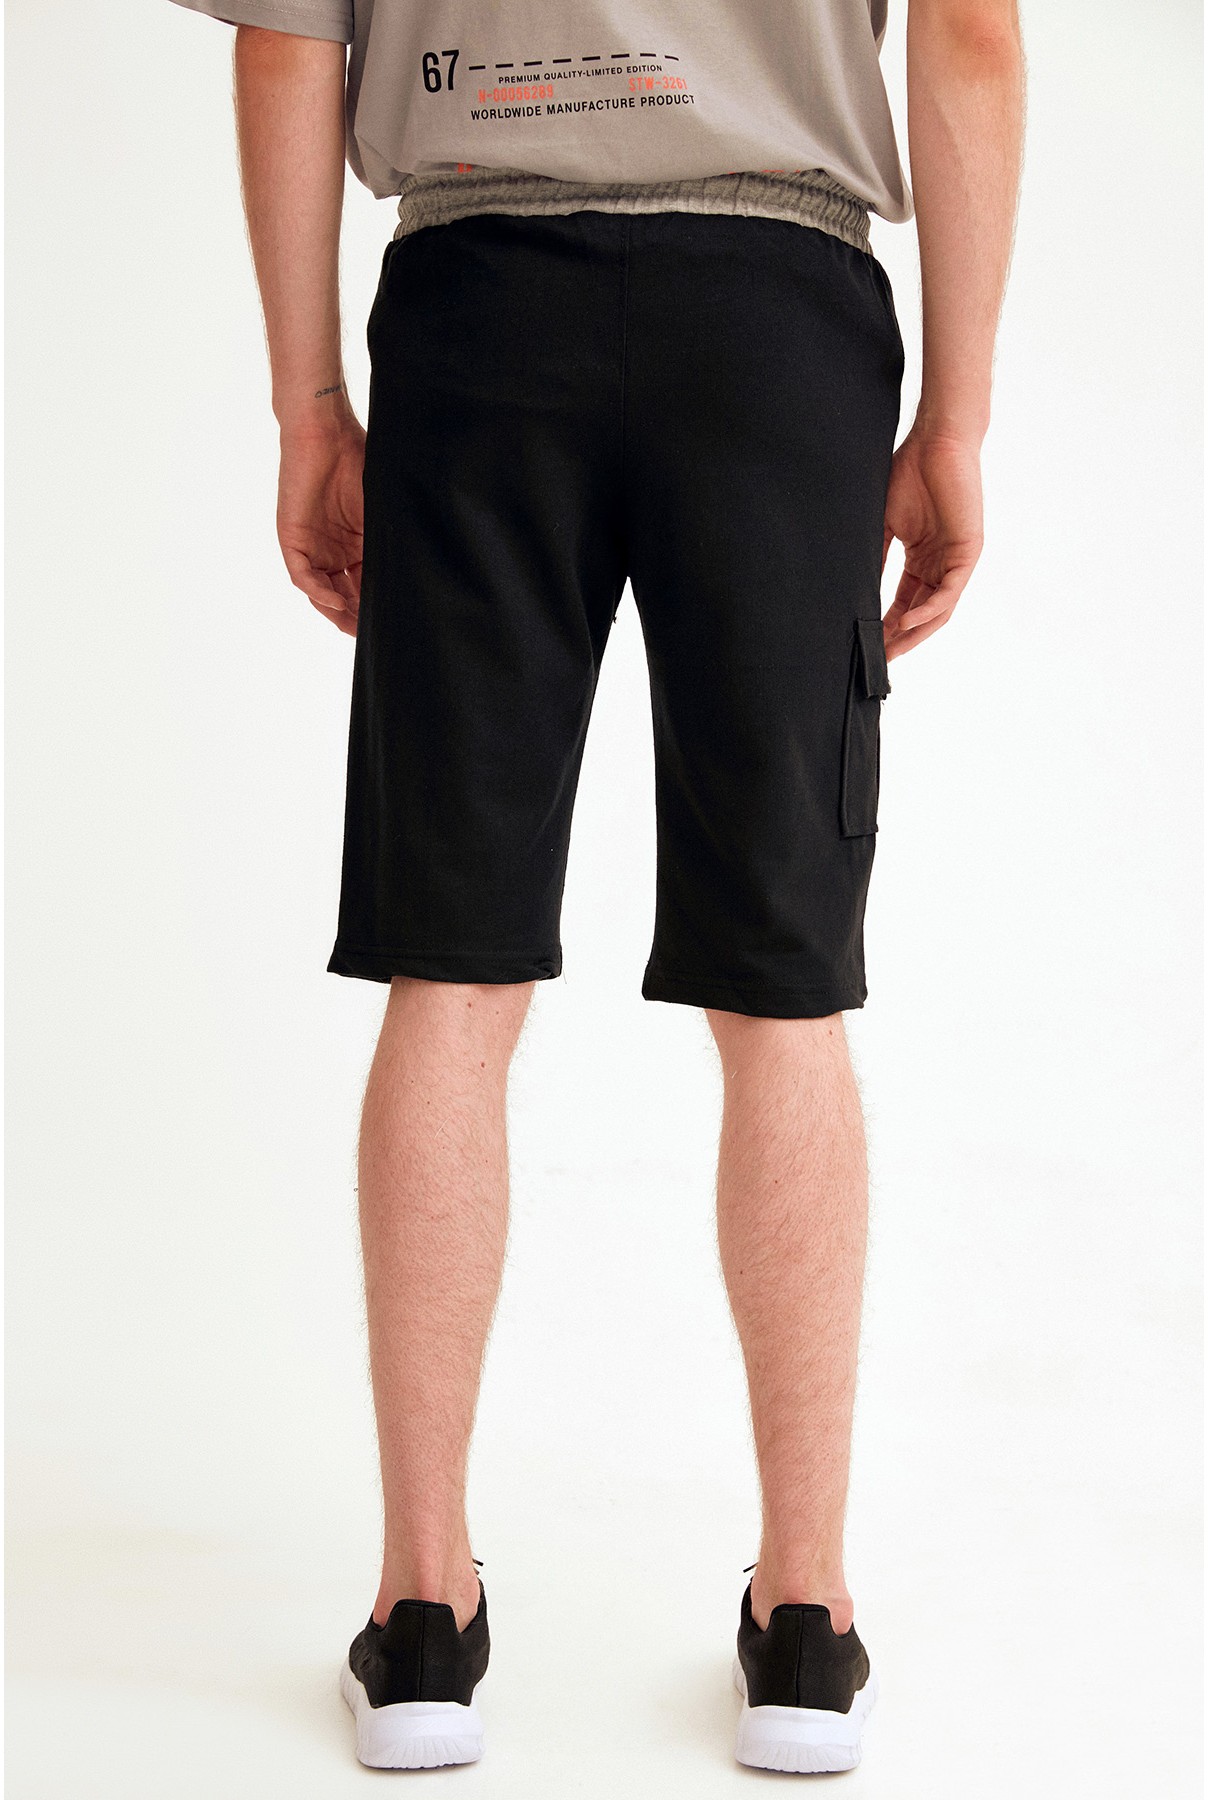 Men's black casual shorts